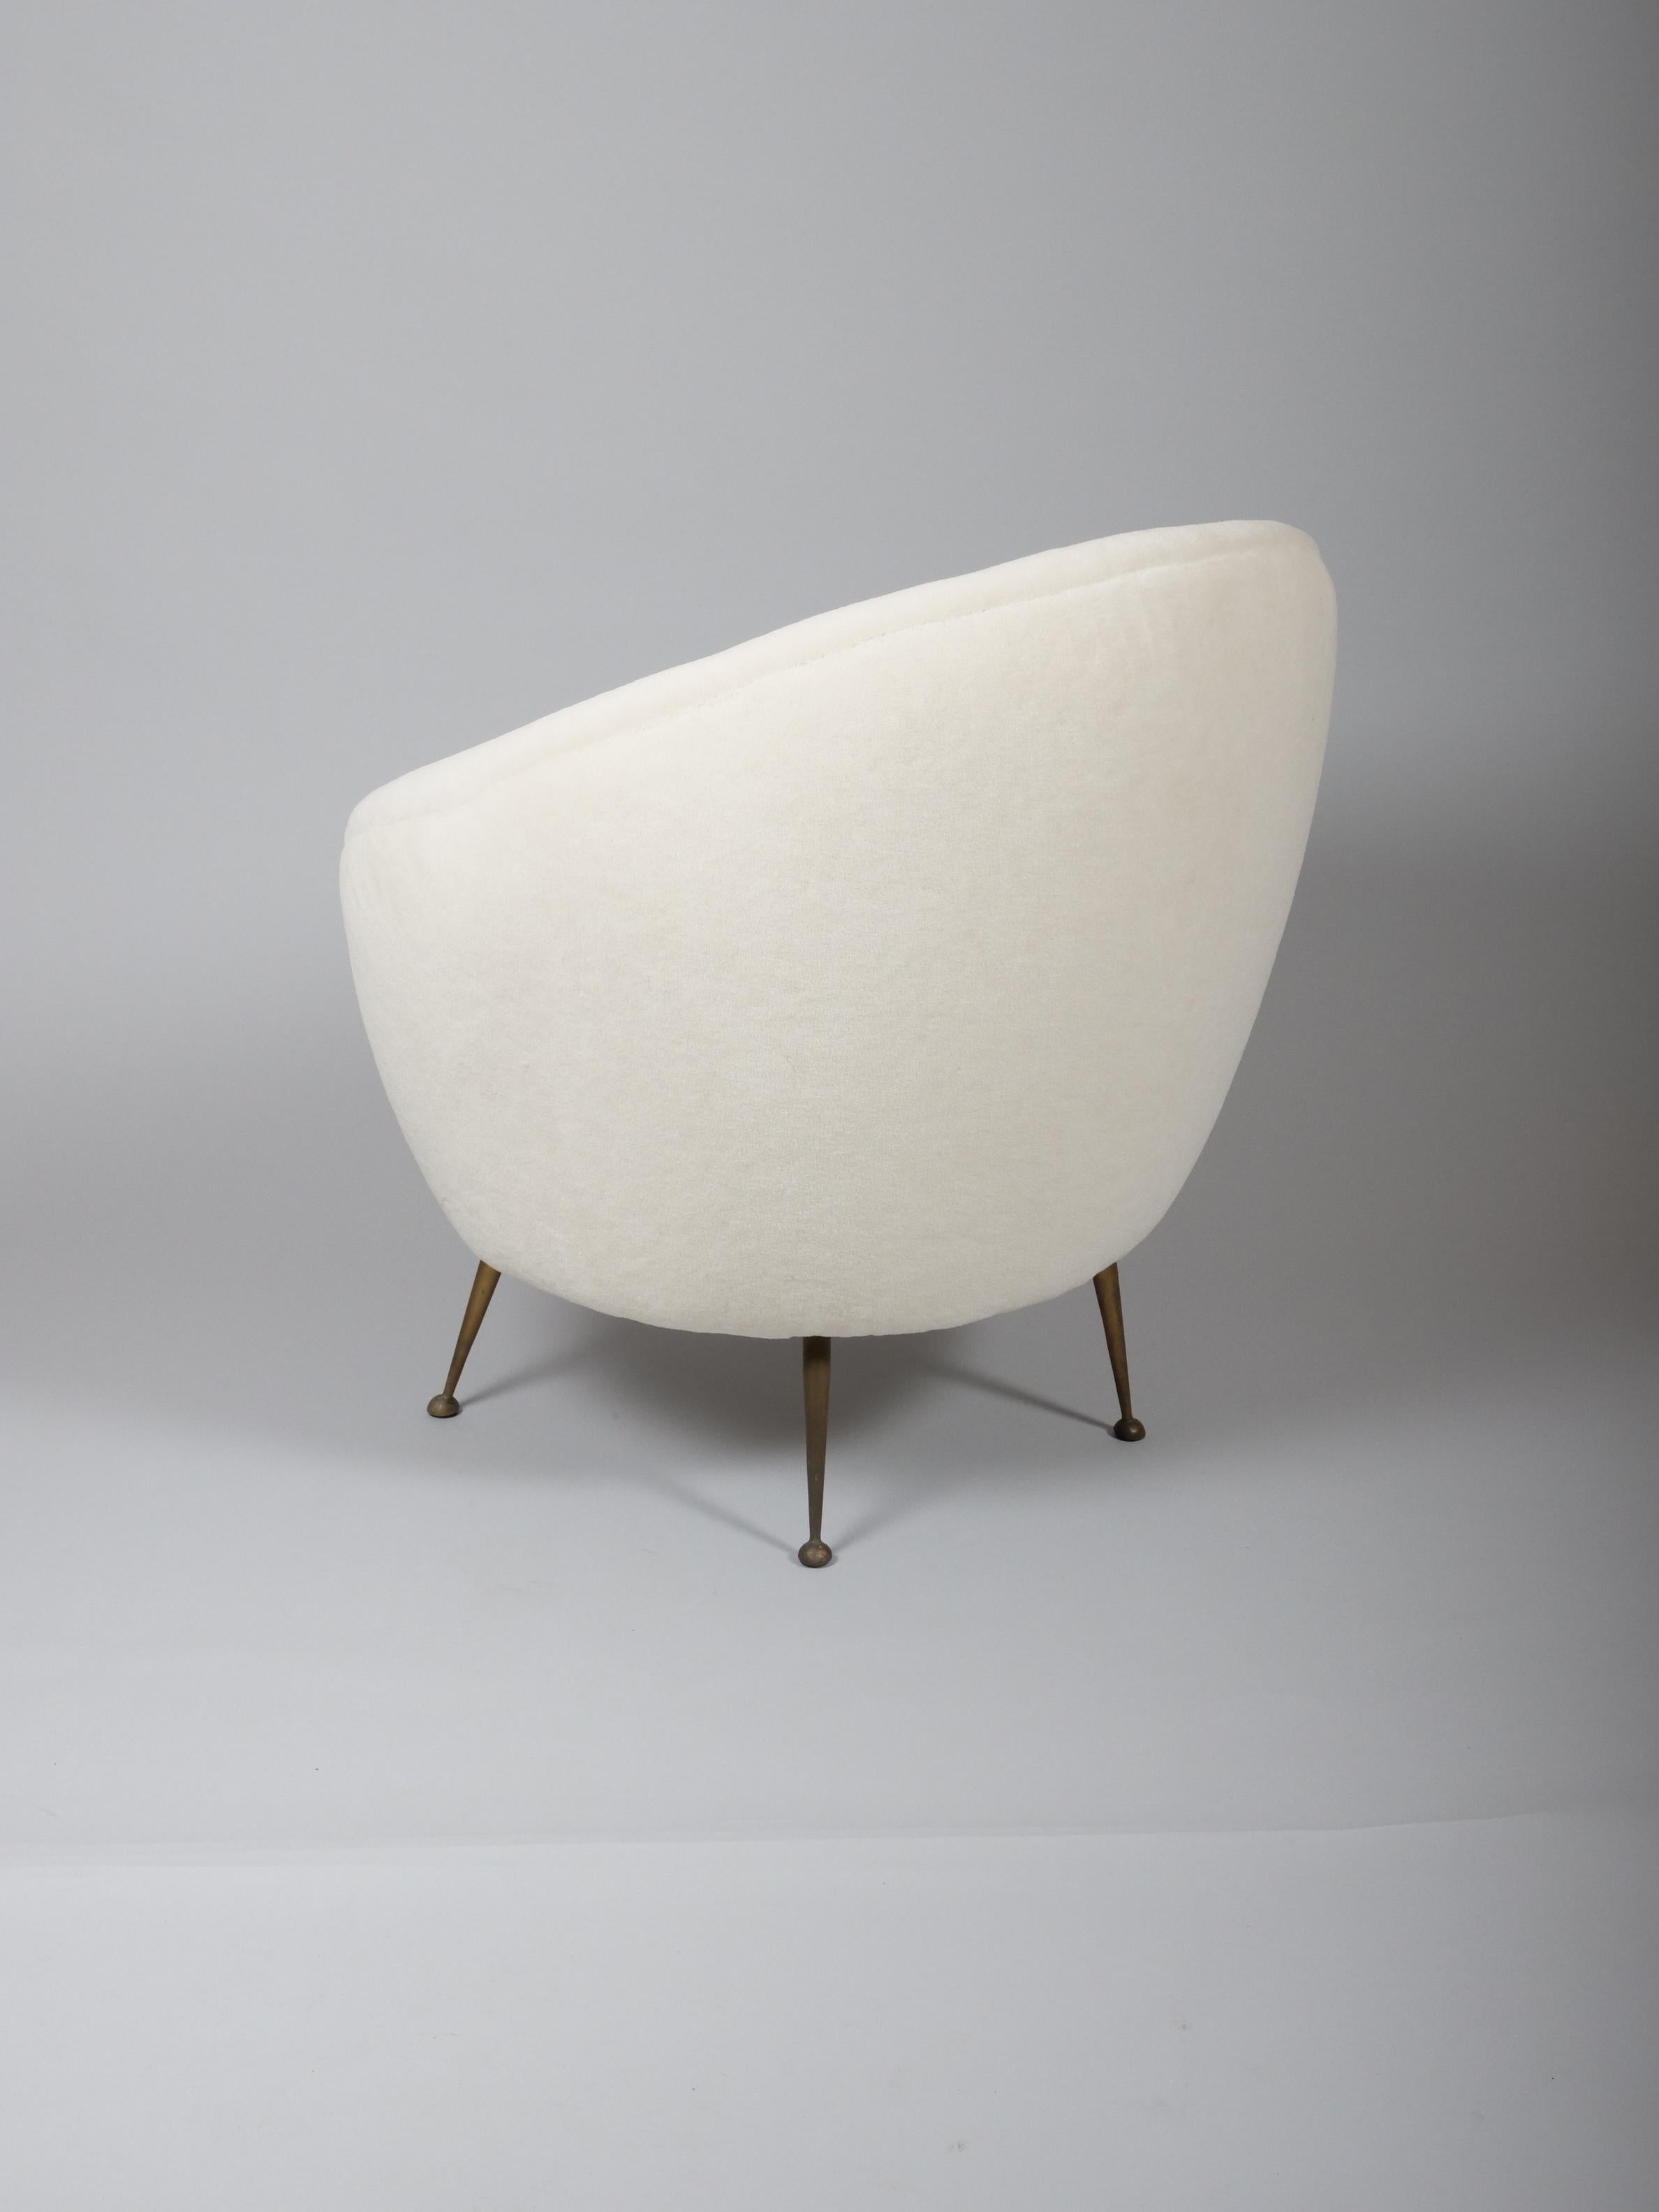 Pair Italian mid century egg shape chairs. Re upholstered in Alpaca wool velvet For Sale 3